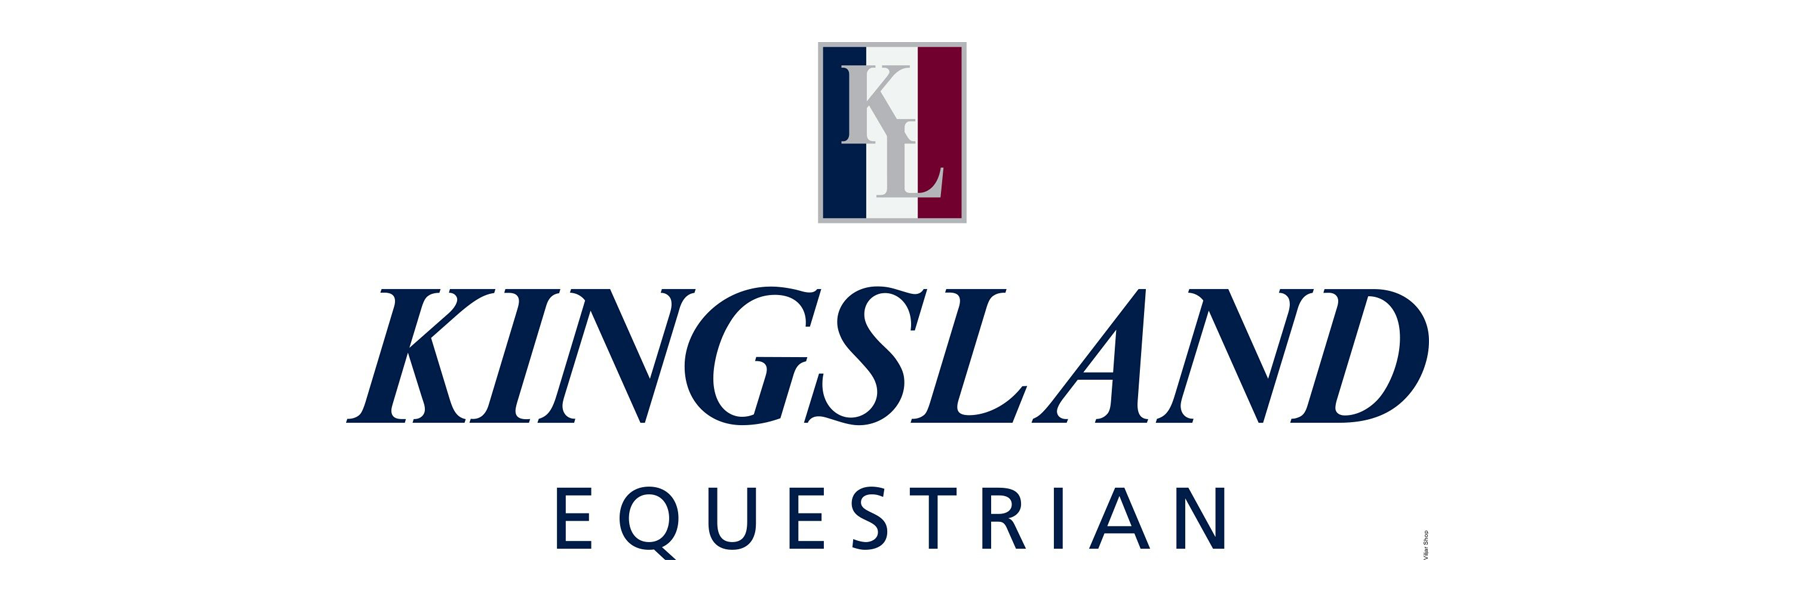 Kingsland - Equestrian fashion online - Hogsta Ridsport - Hogsta